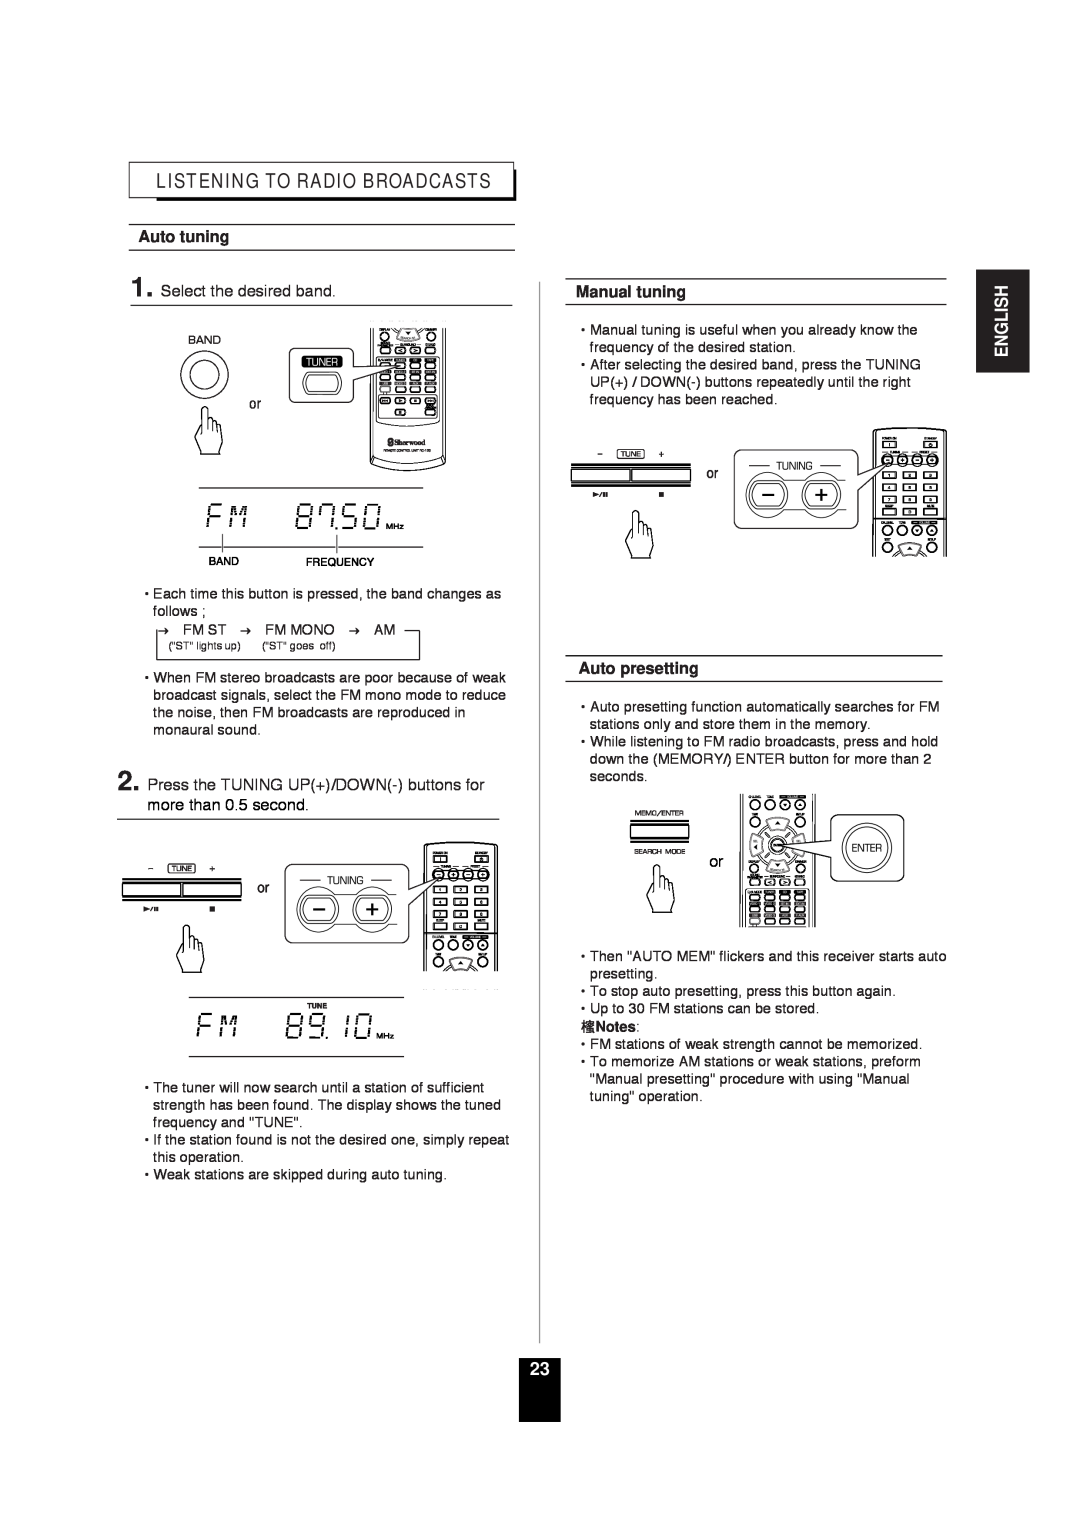 Sherwood RD-6503 manual Listening To Radio Broadcasts, Auto tuning, Manual tuning, Auto presetting, English 